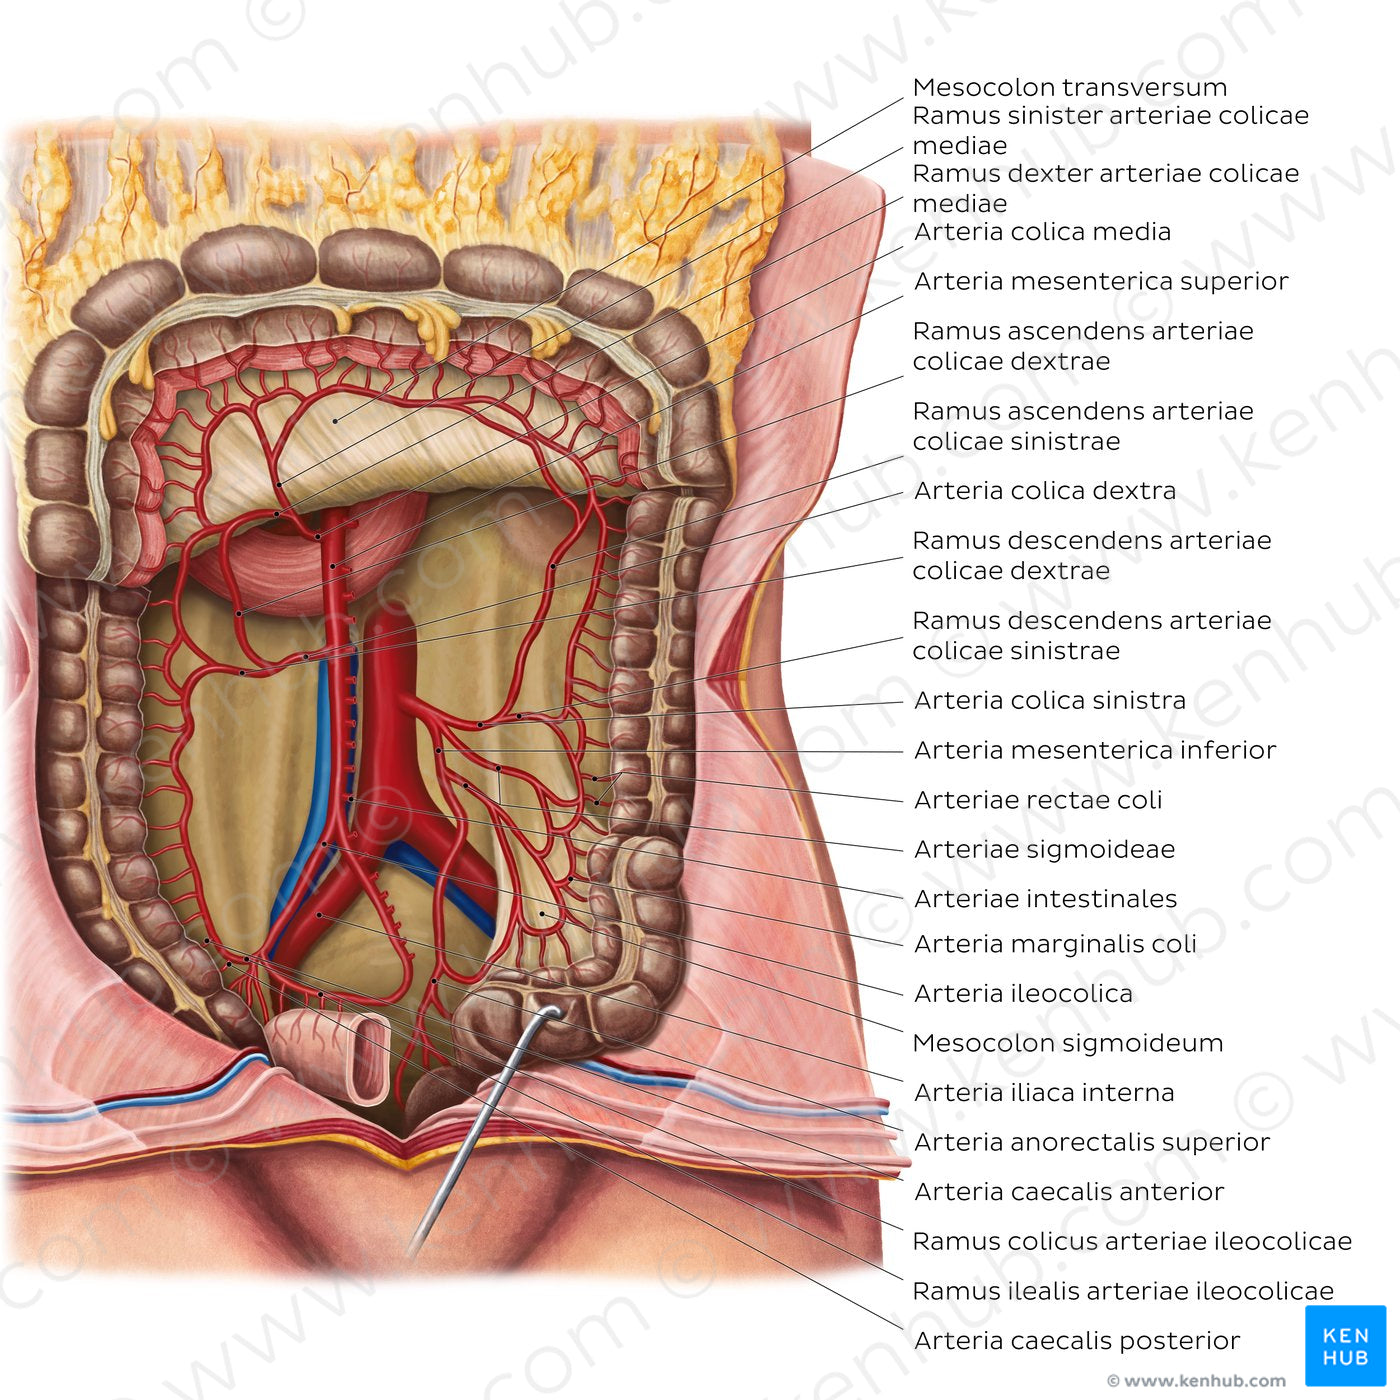 Arteries of the large intestine (Latin)